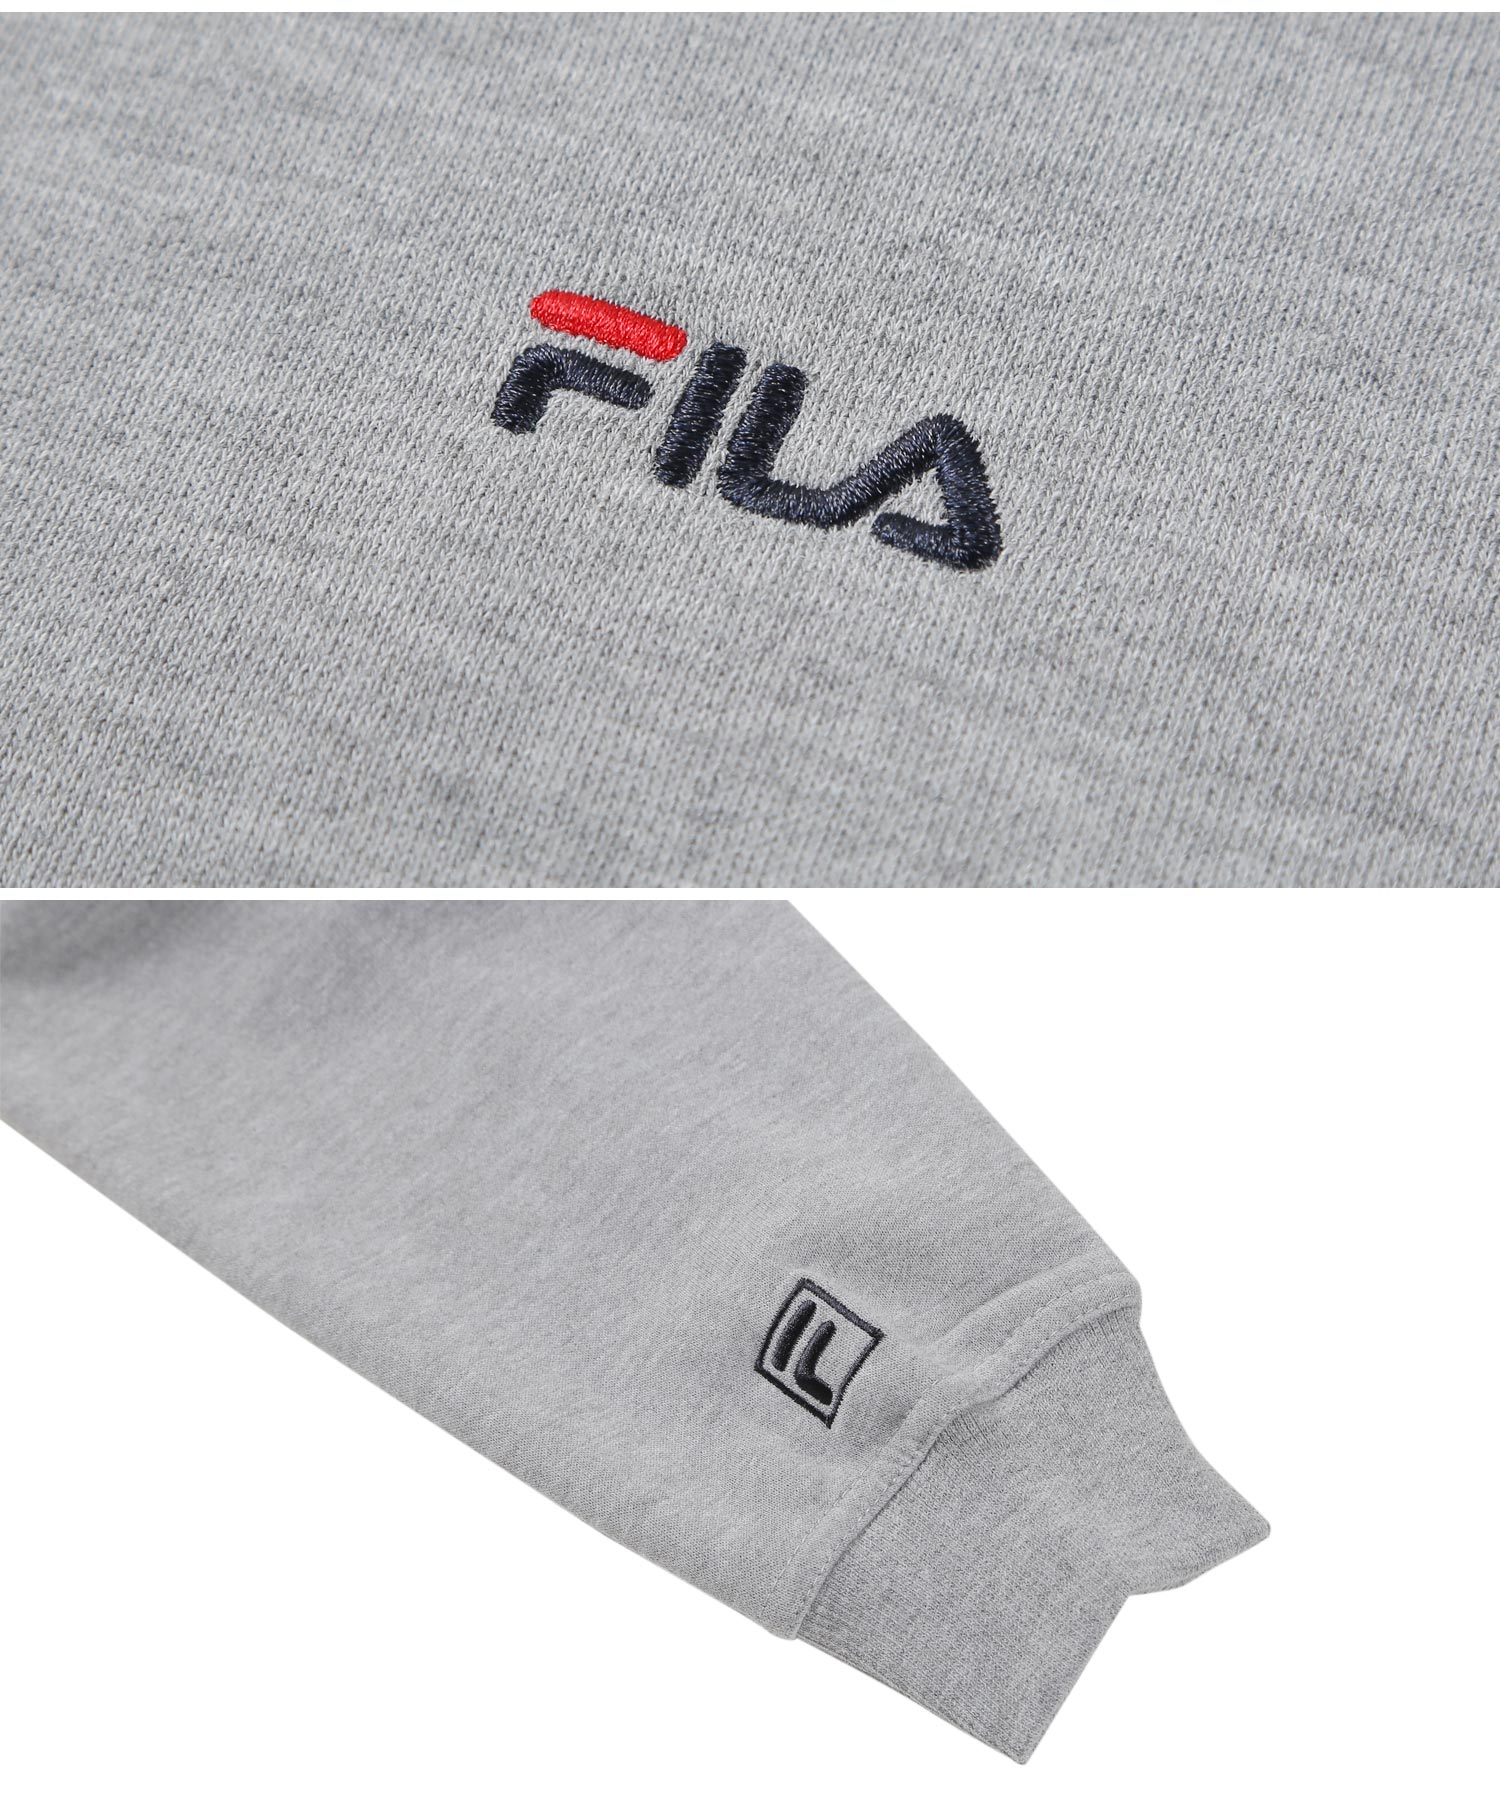 FILA(フィラ) ワンポイント刺繍プルパーカー / ブランド パーカー 